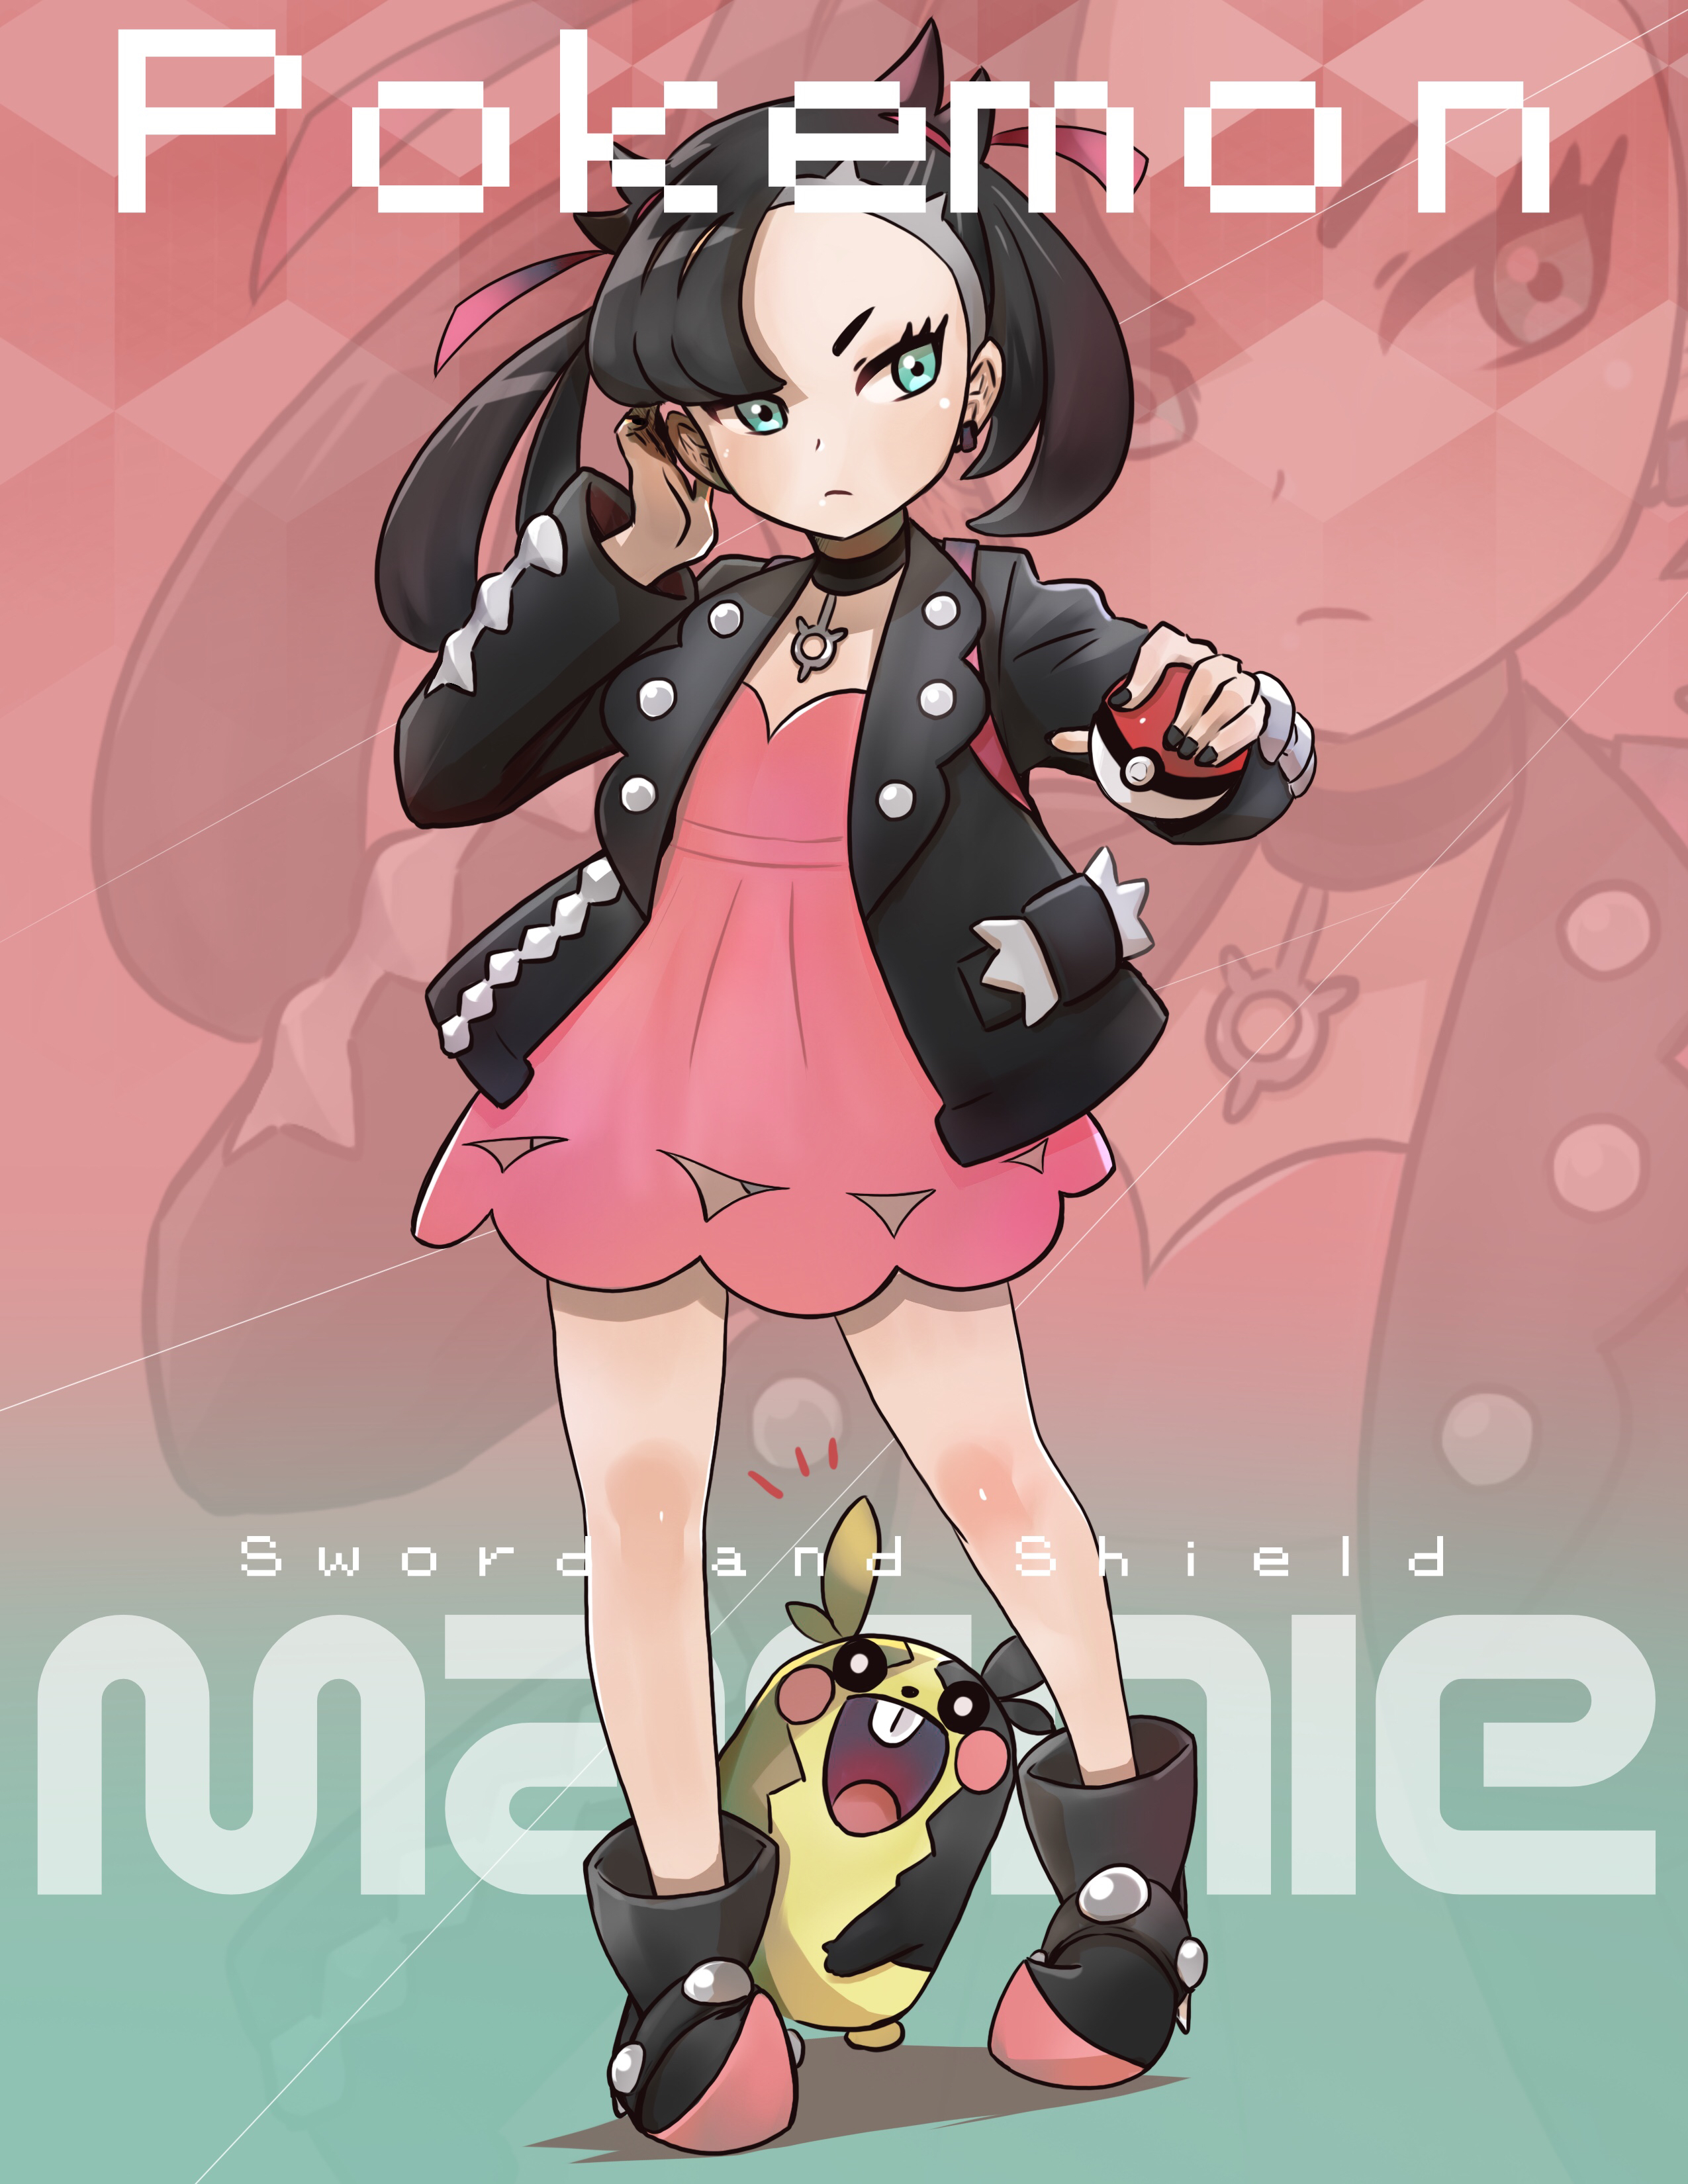 Marnie from Pokémon SW&SH插画图片壁纸